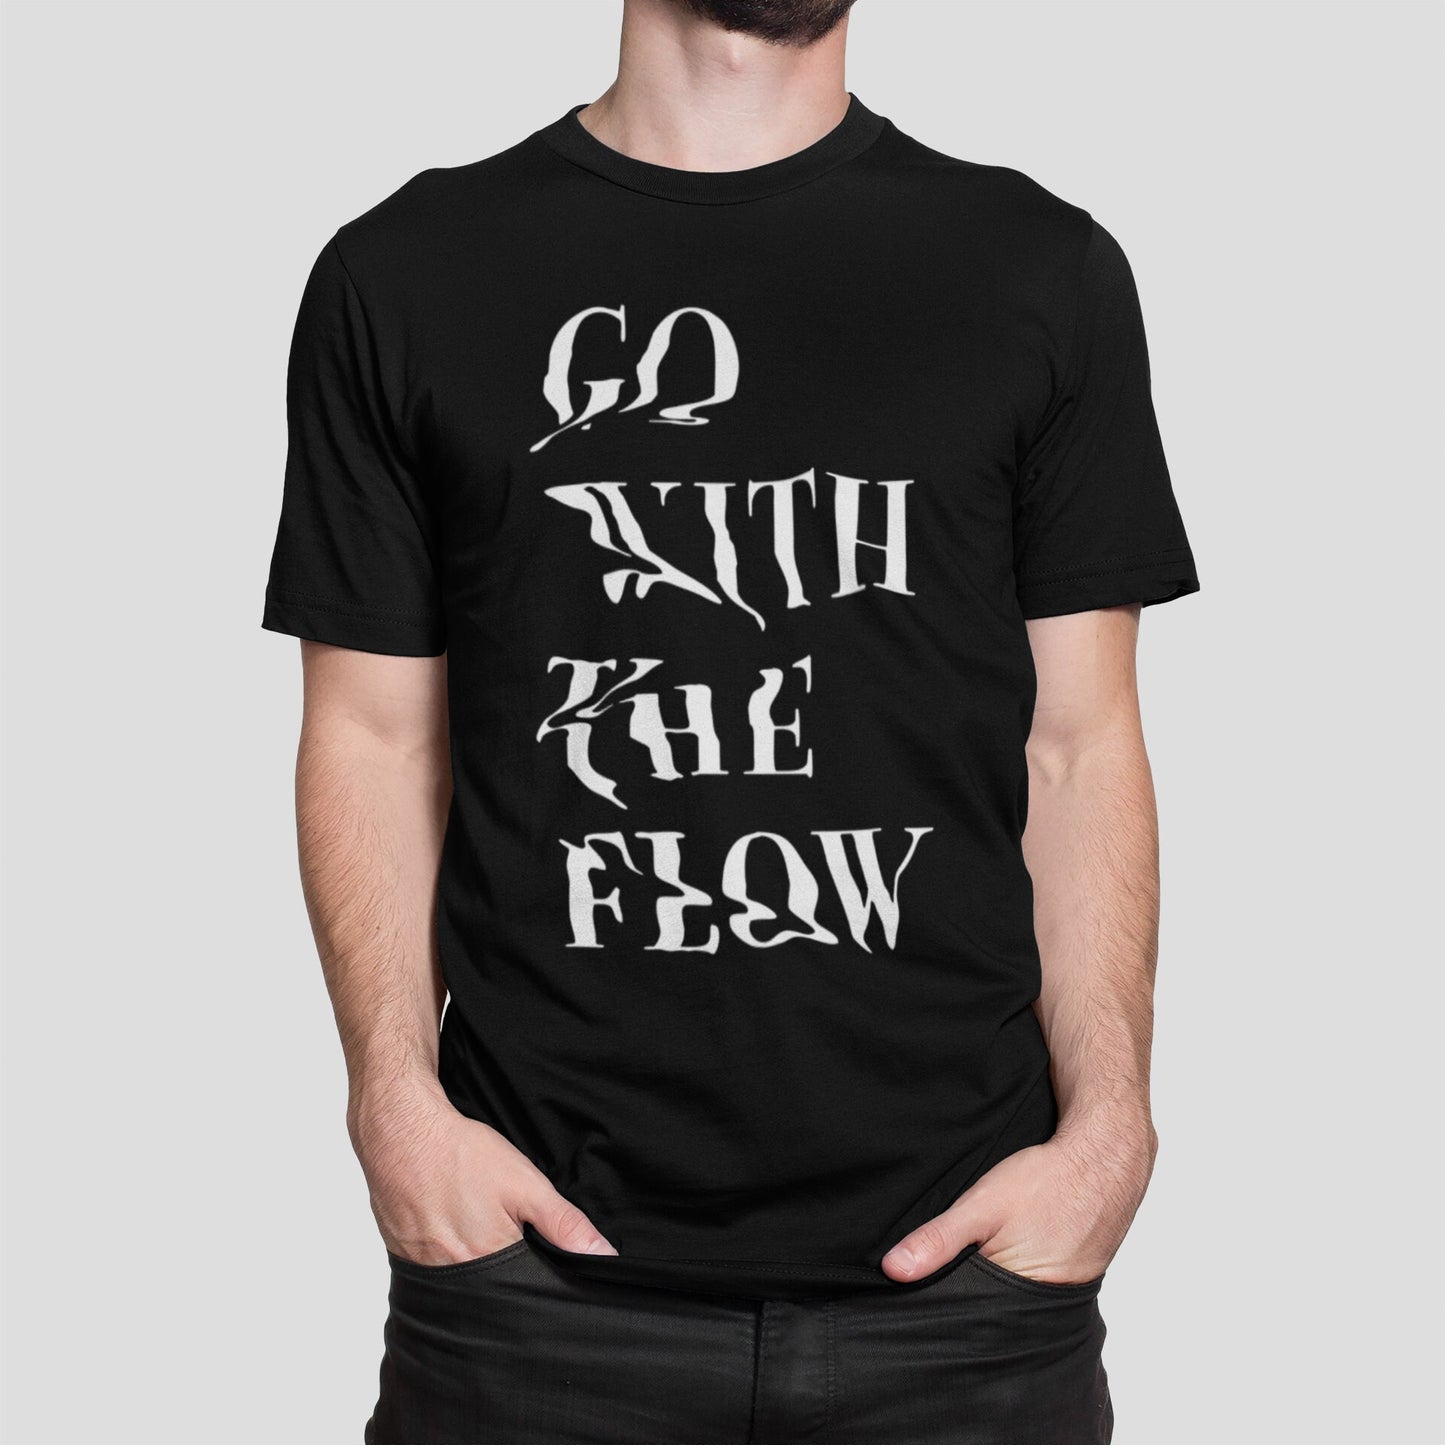 Go With The Flow Men's T-shirt, Mens Slogan Tees, Glitch Art T Shirt, Motto Mens TShirt, Humor T-Shirt, Original Illustration By Ali Gulec